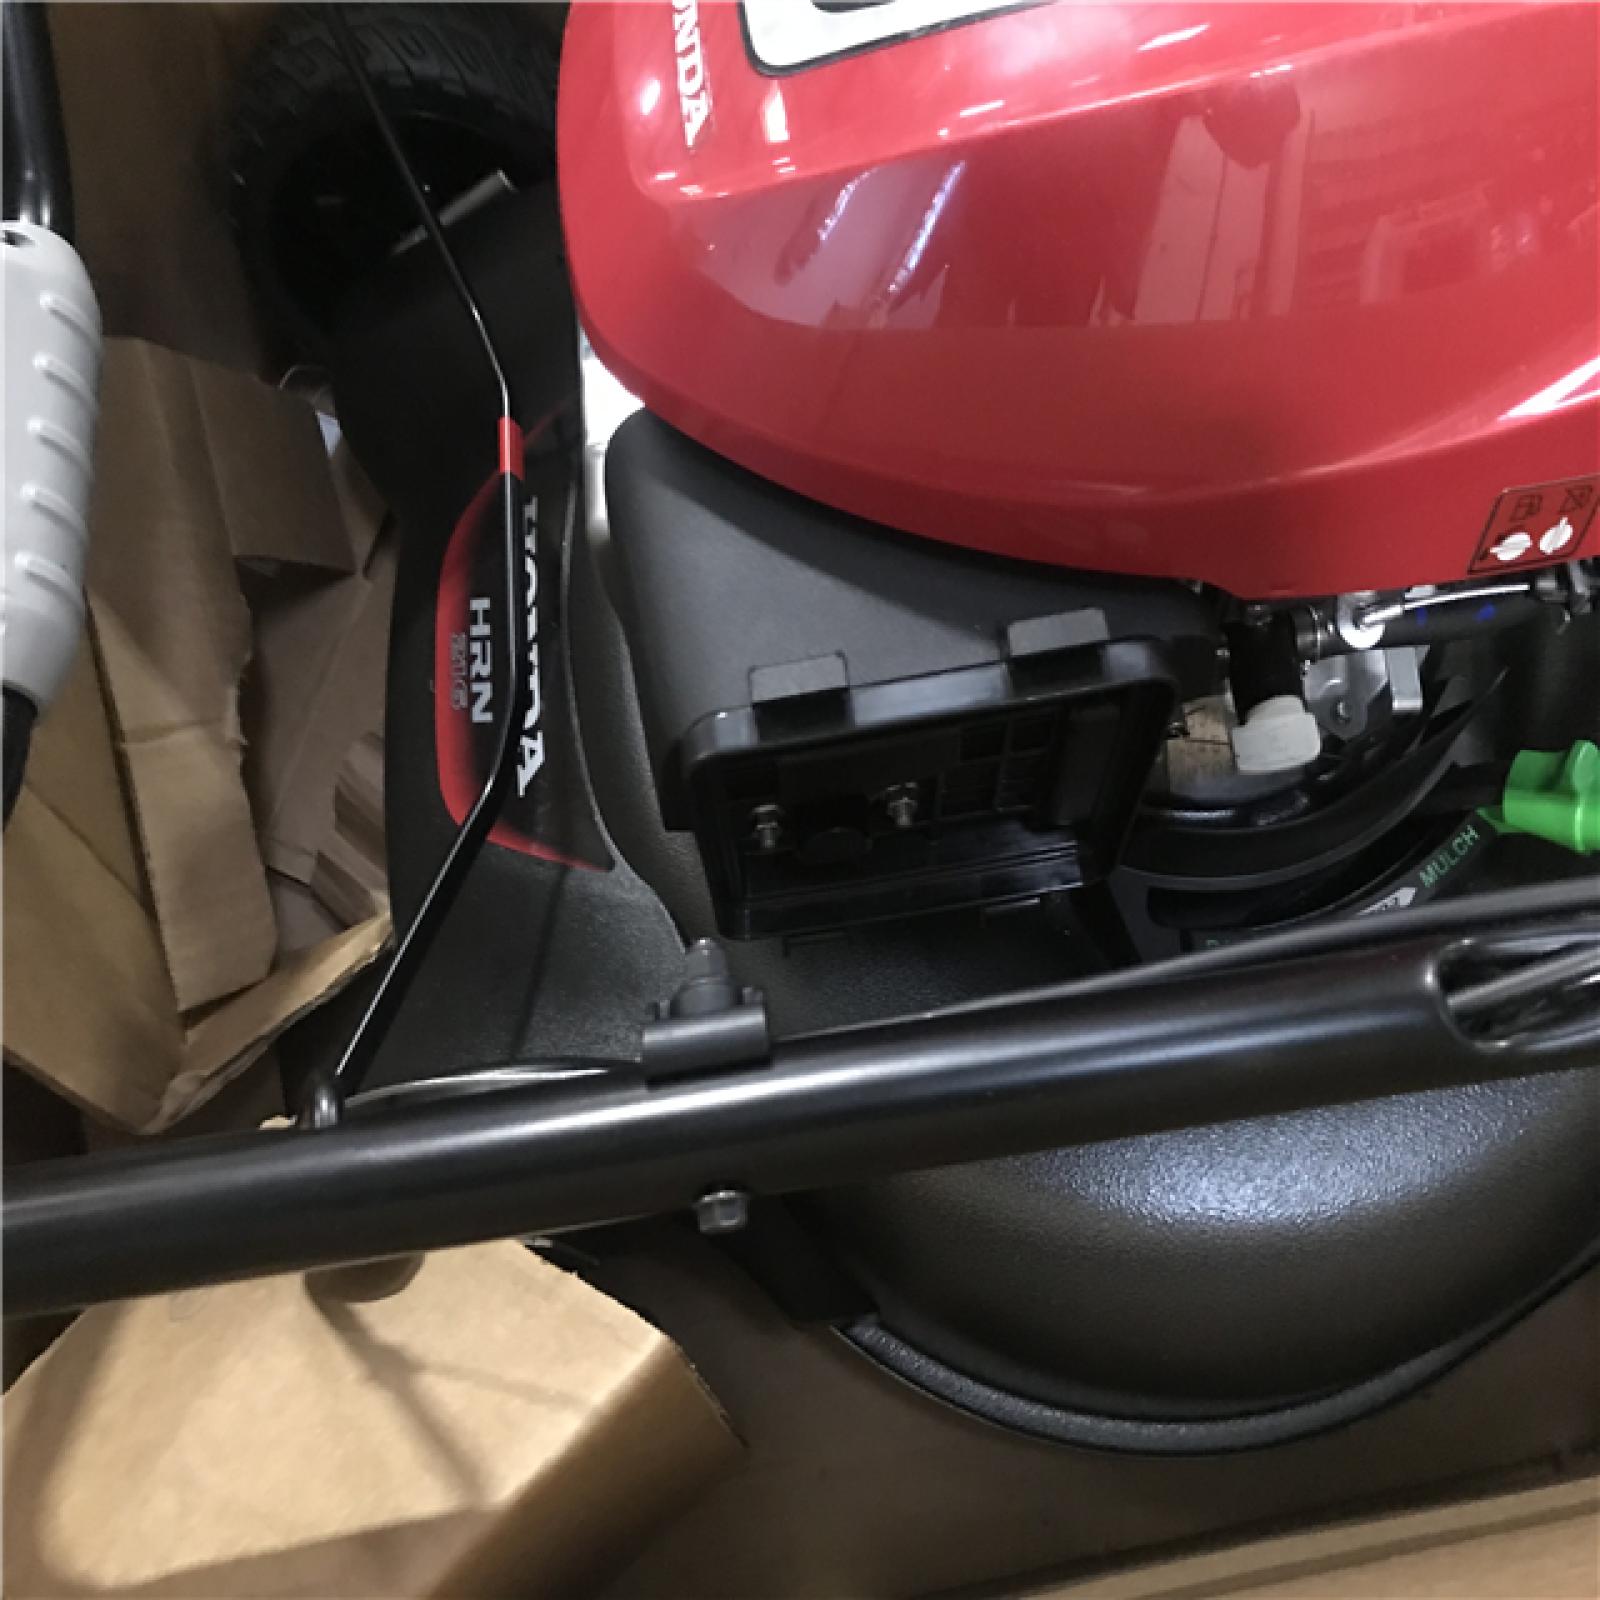 California AS-IS Honda Hrn Self-Propelled Variable Speed Lawn Mower W/ Auto Choke